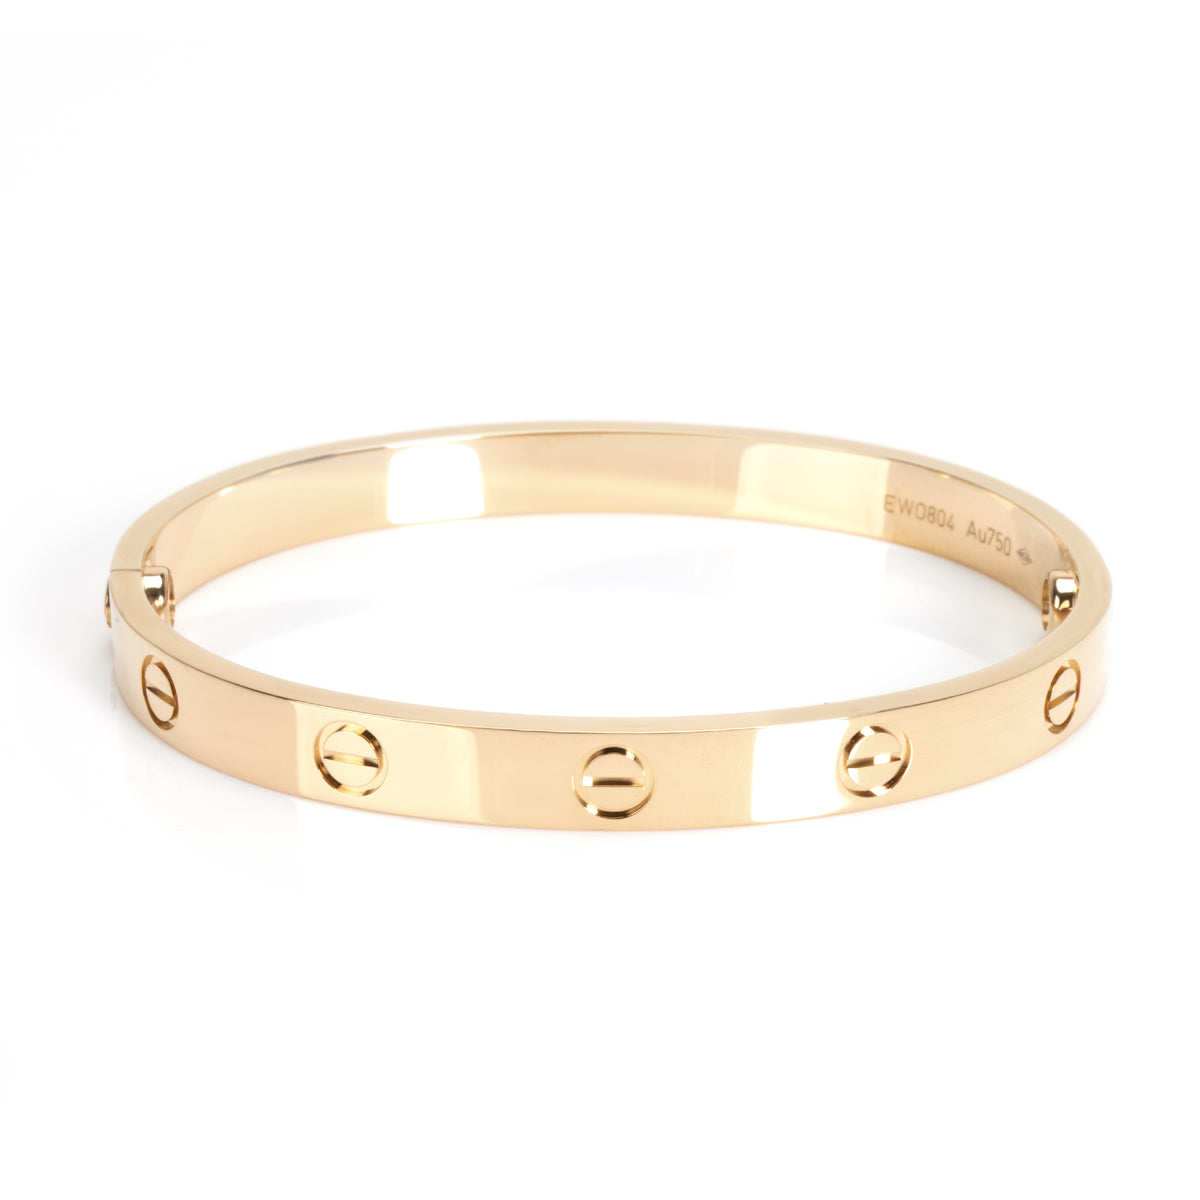 Cartier Love Bracelet in 18KT Yellow Gold